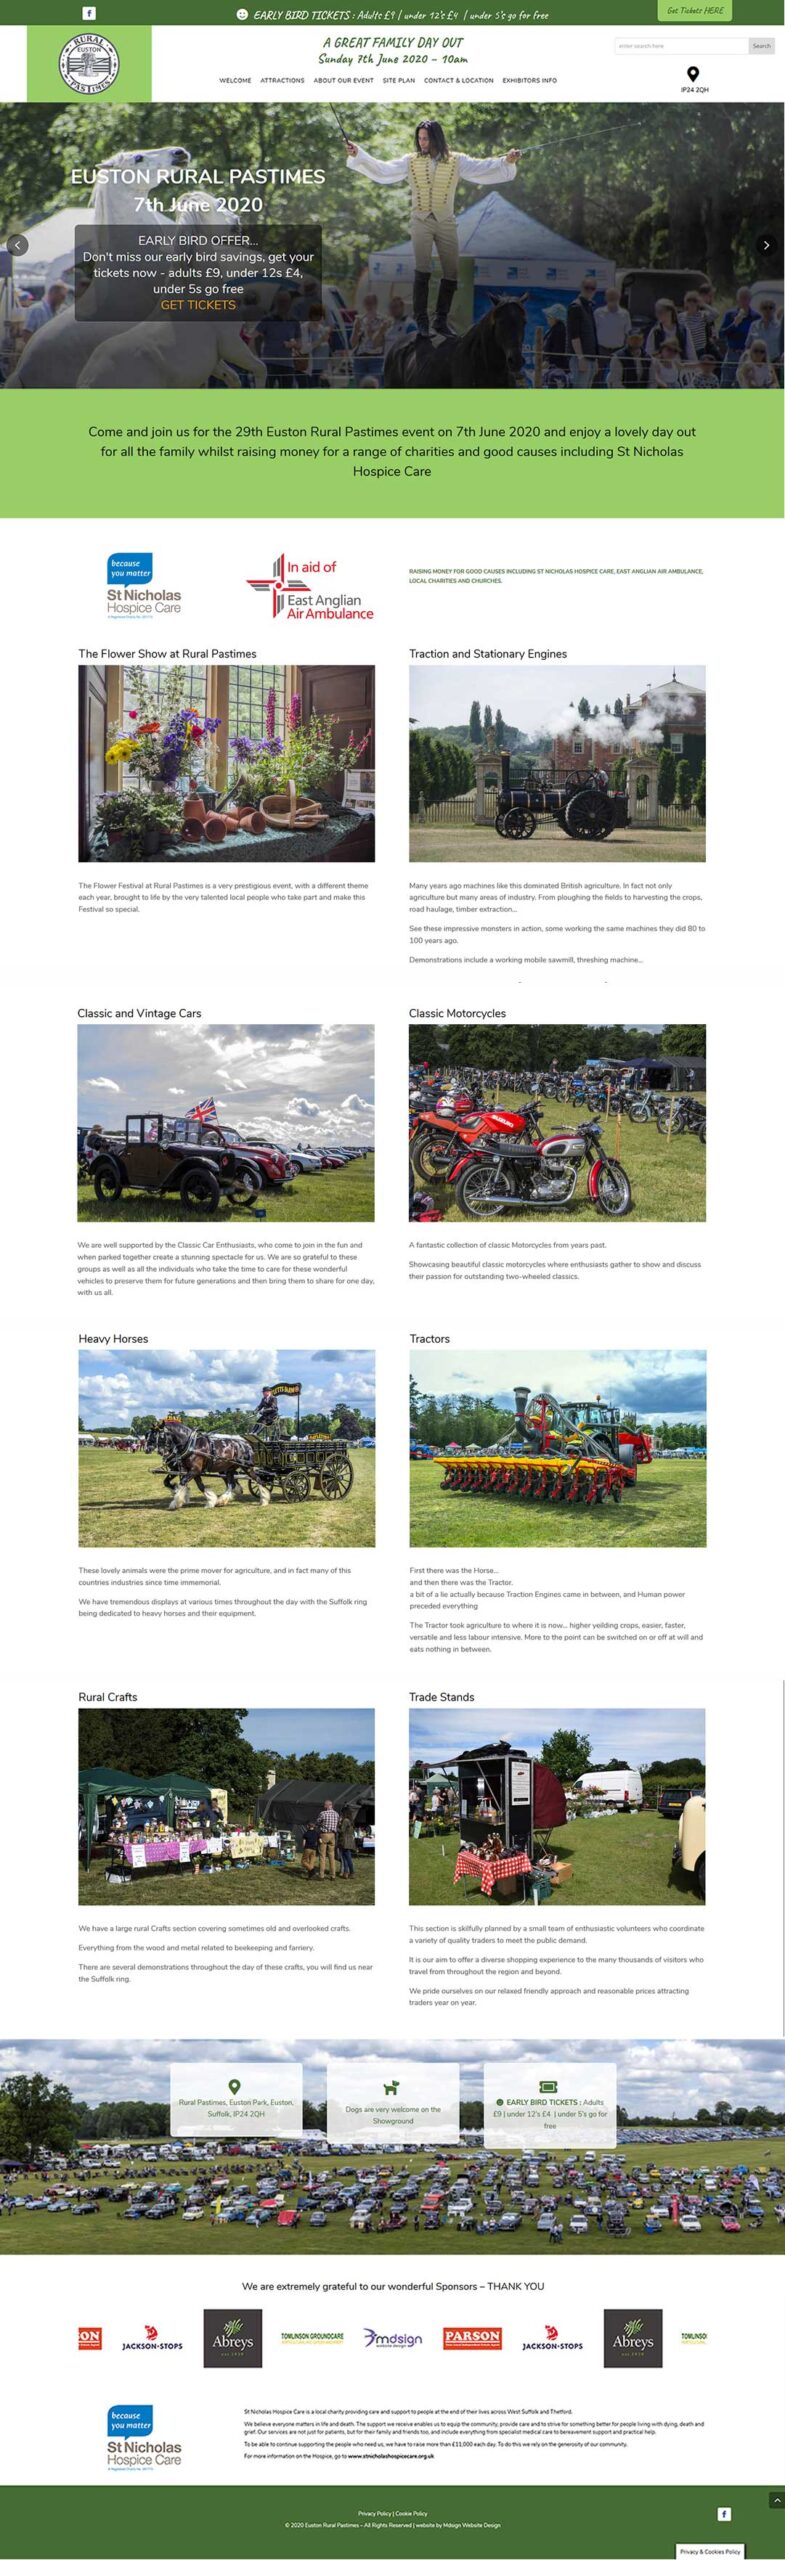 Euston Rural Pastimes website design